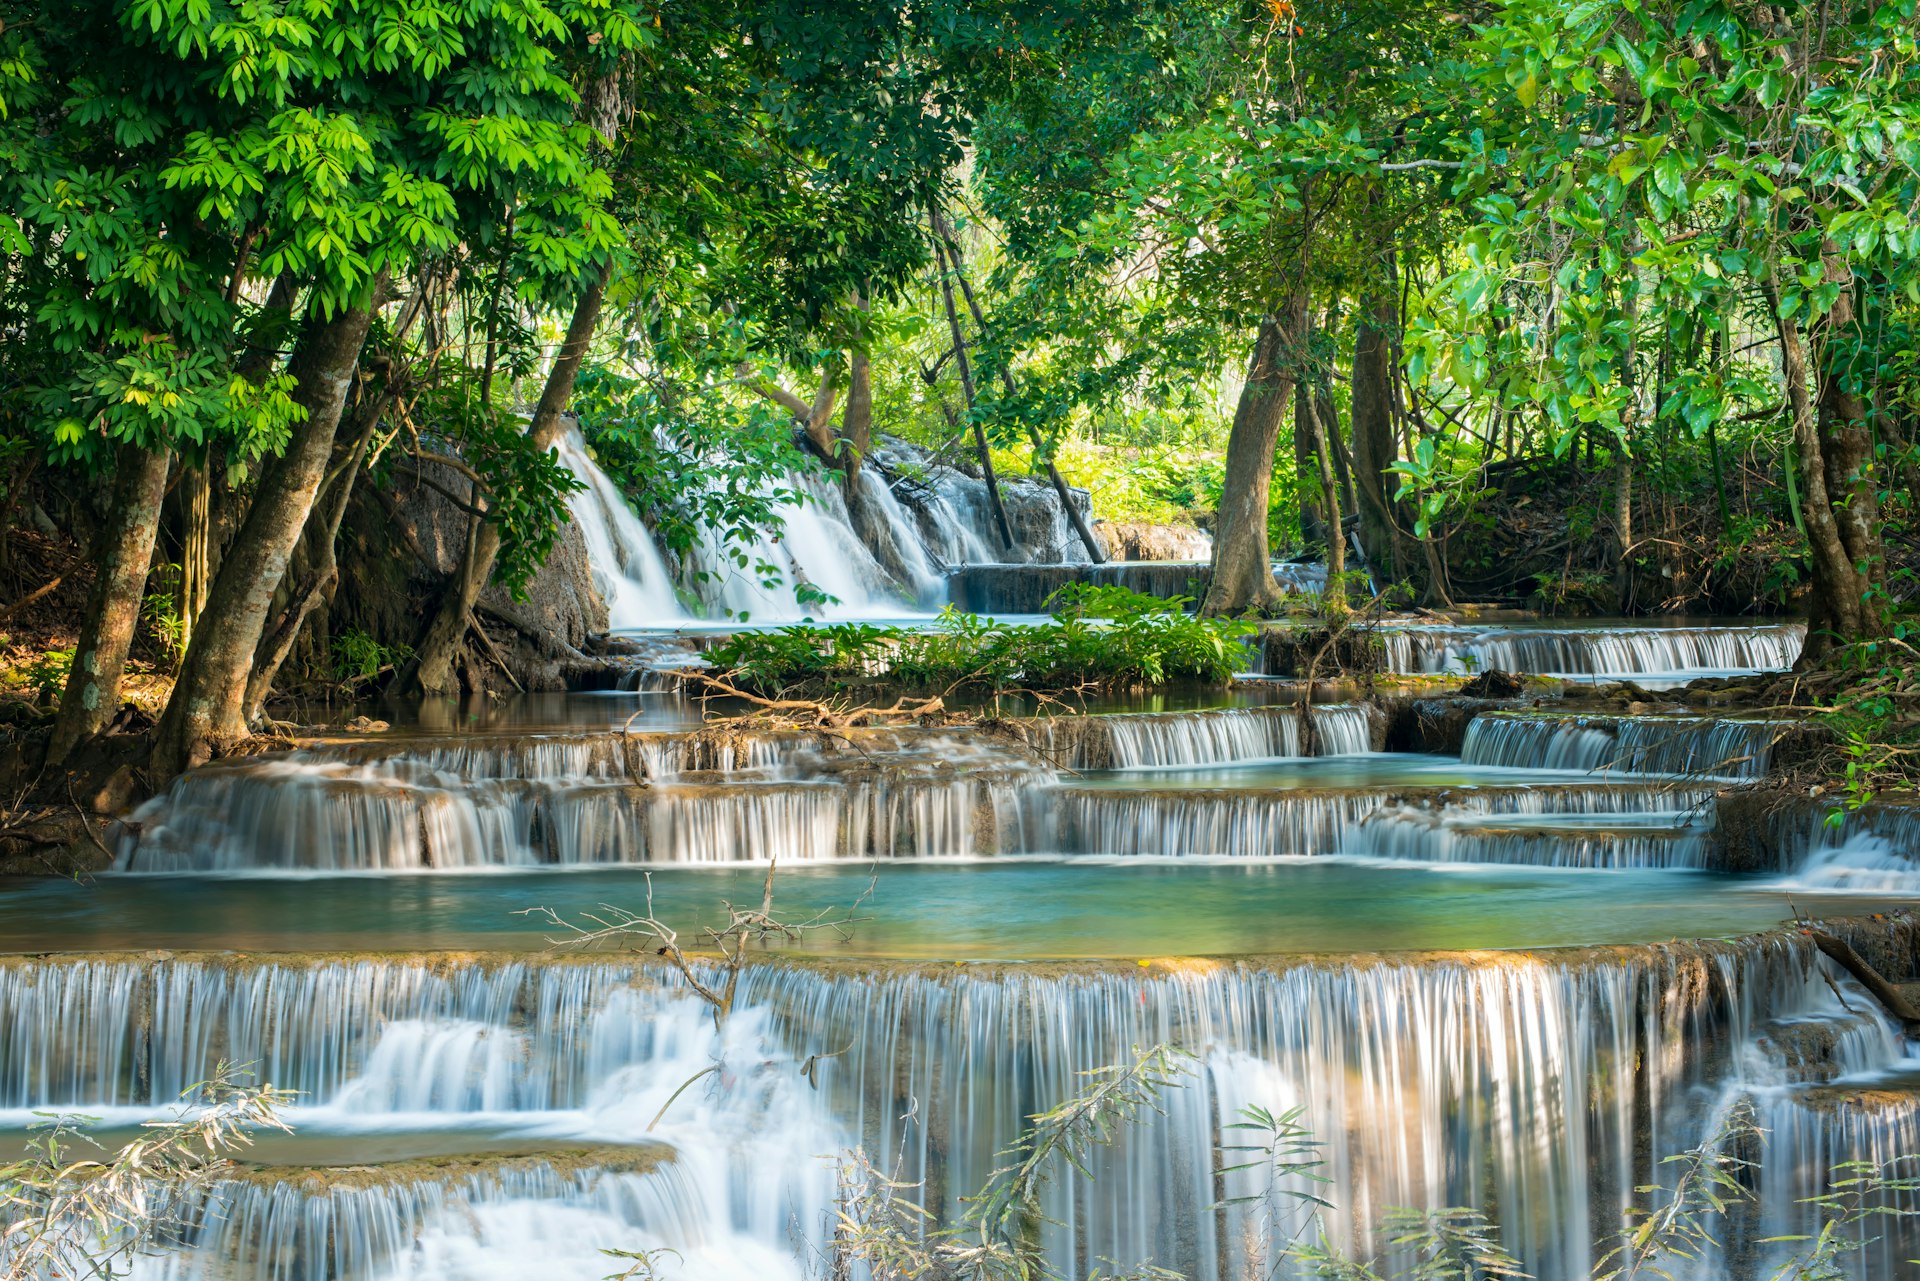 The cascades of Erawan's waterfall, located in Erawan National Park, Kanchanaburi Province,